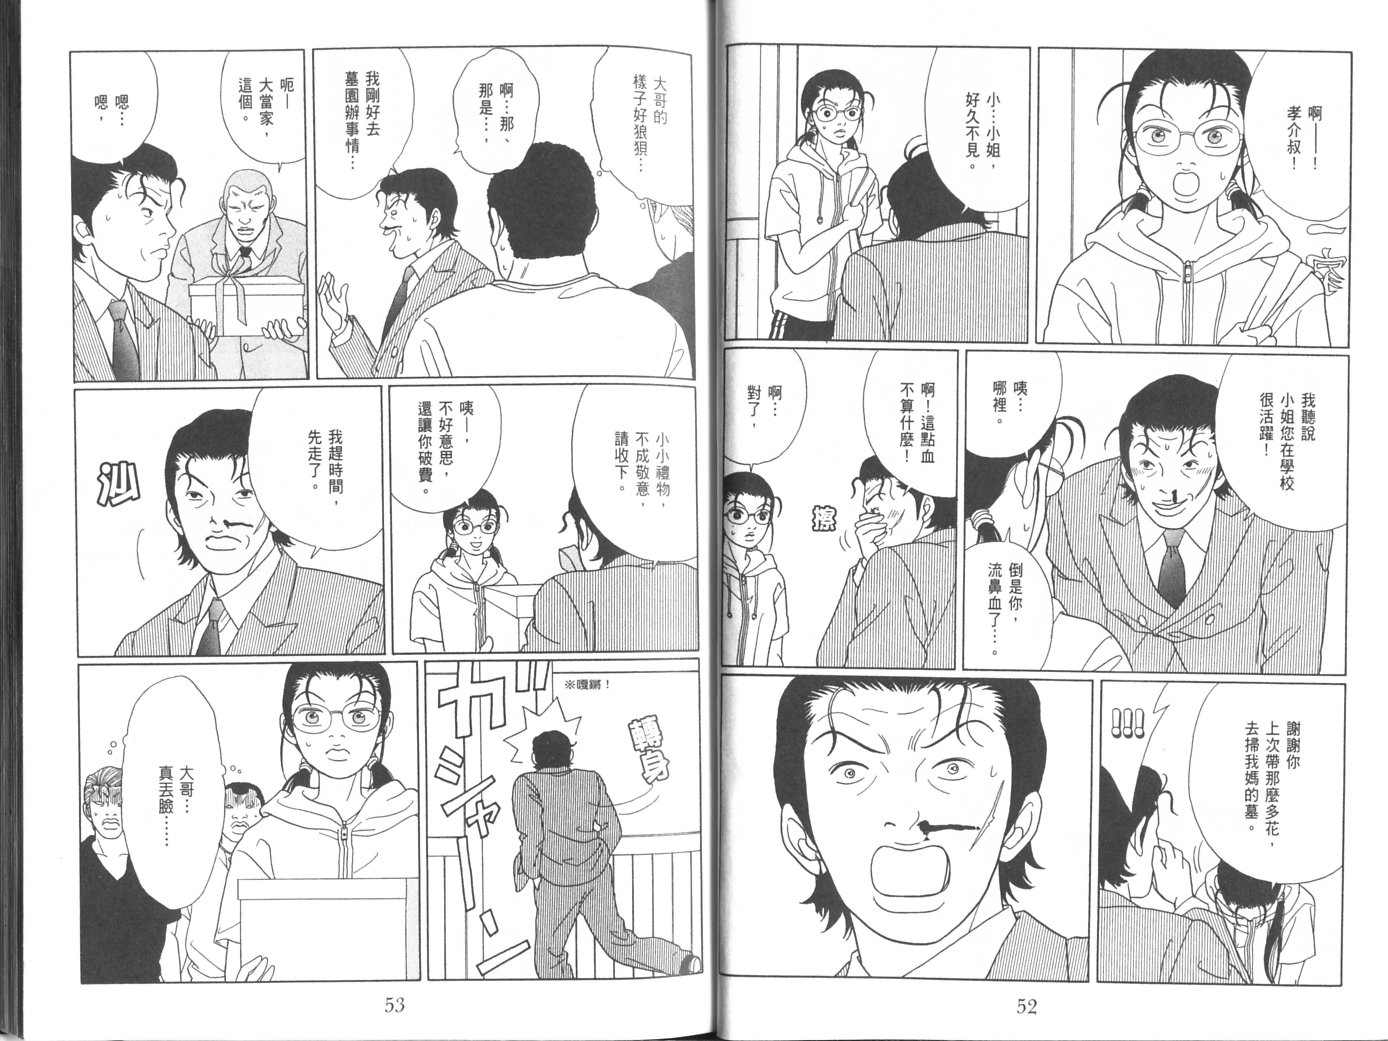 billwang_comic_4261236-Gokusen_08_032-embed.jpg